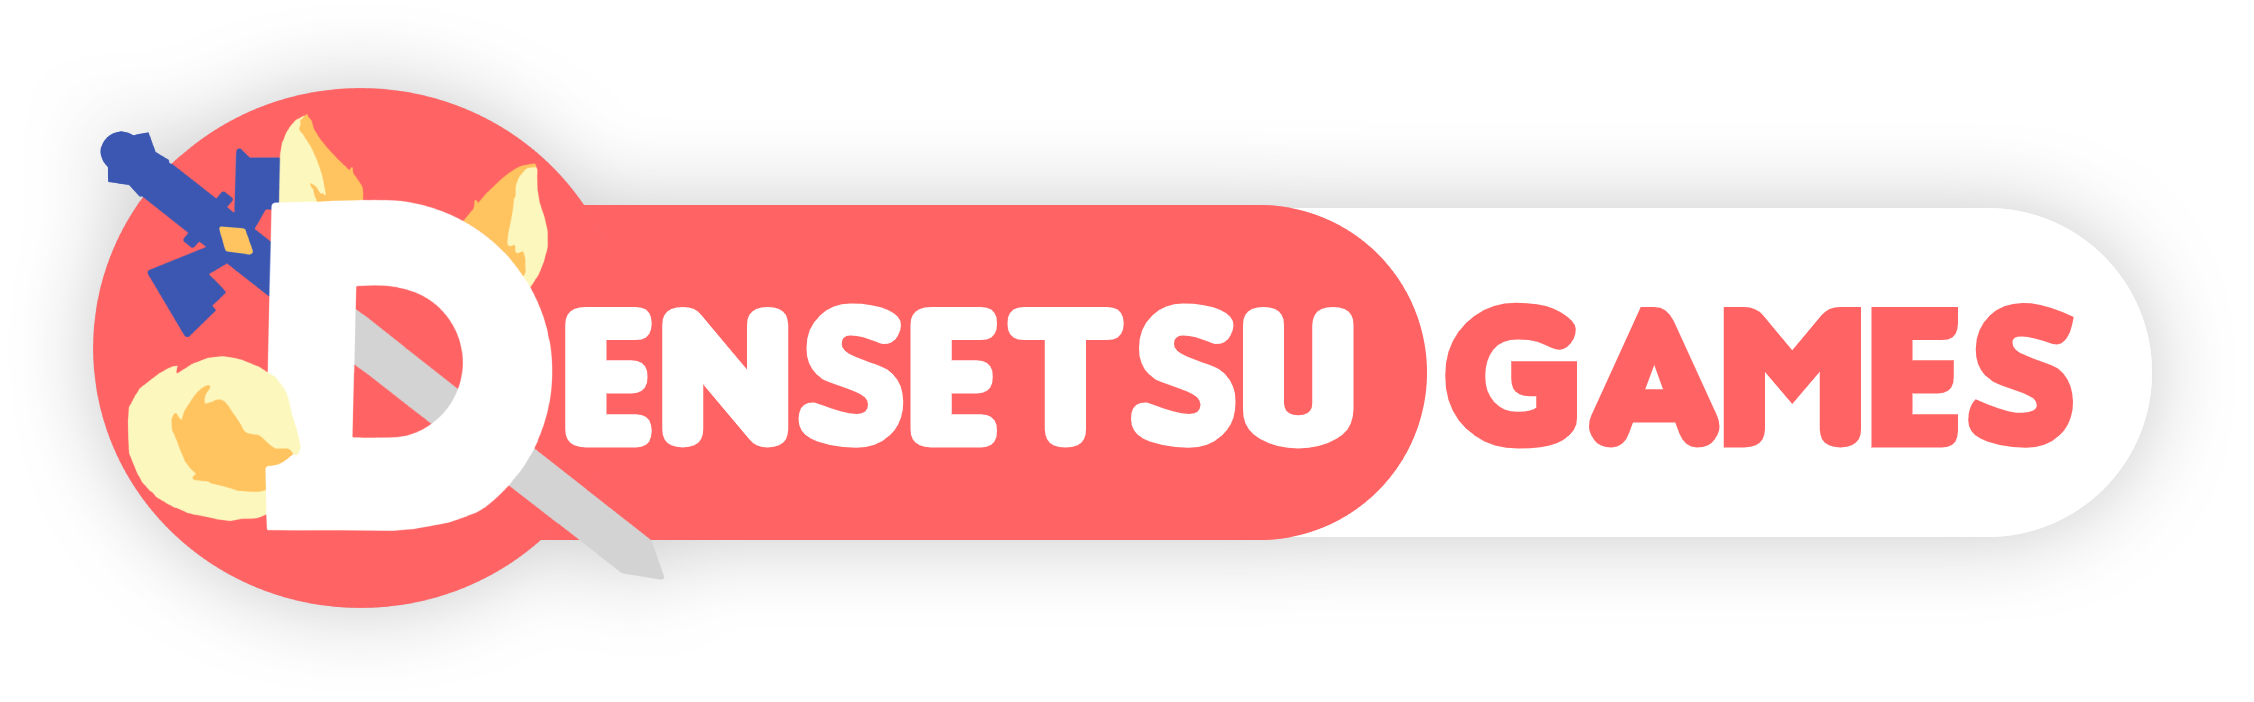 Densetsu Games